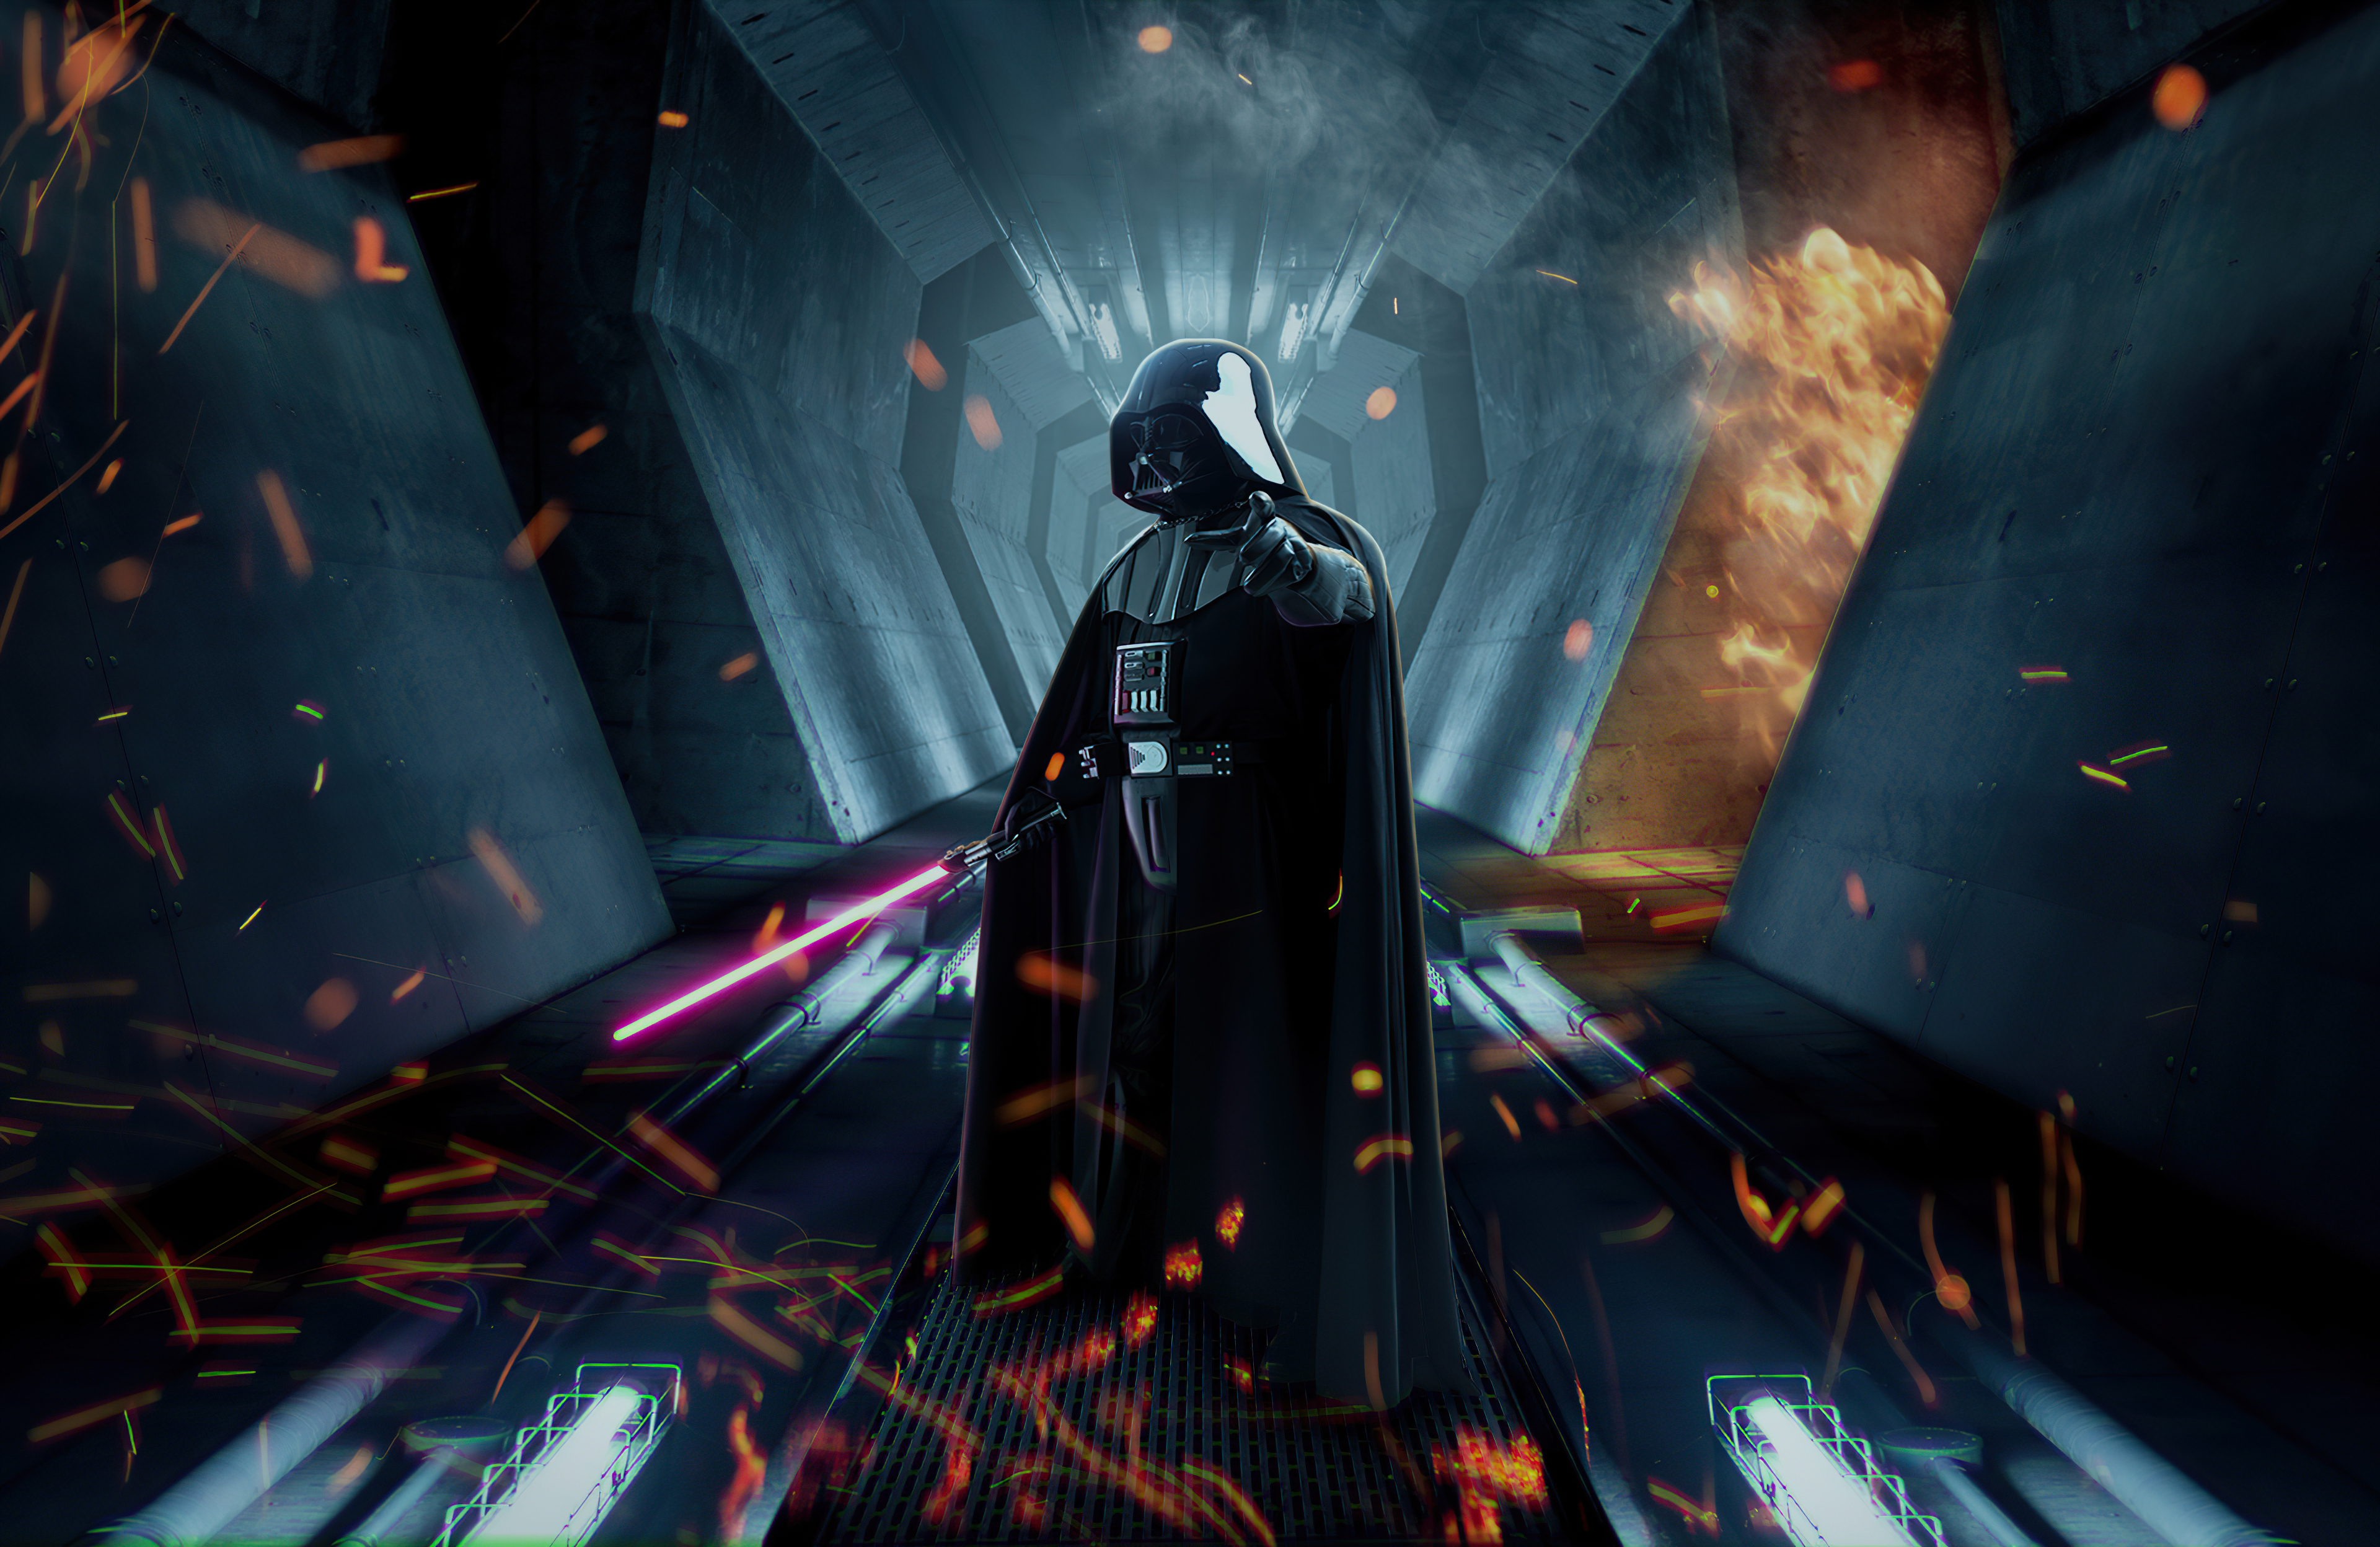 Darth Vader Star Wars 2021 Wallpapers